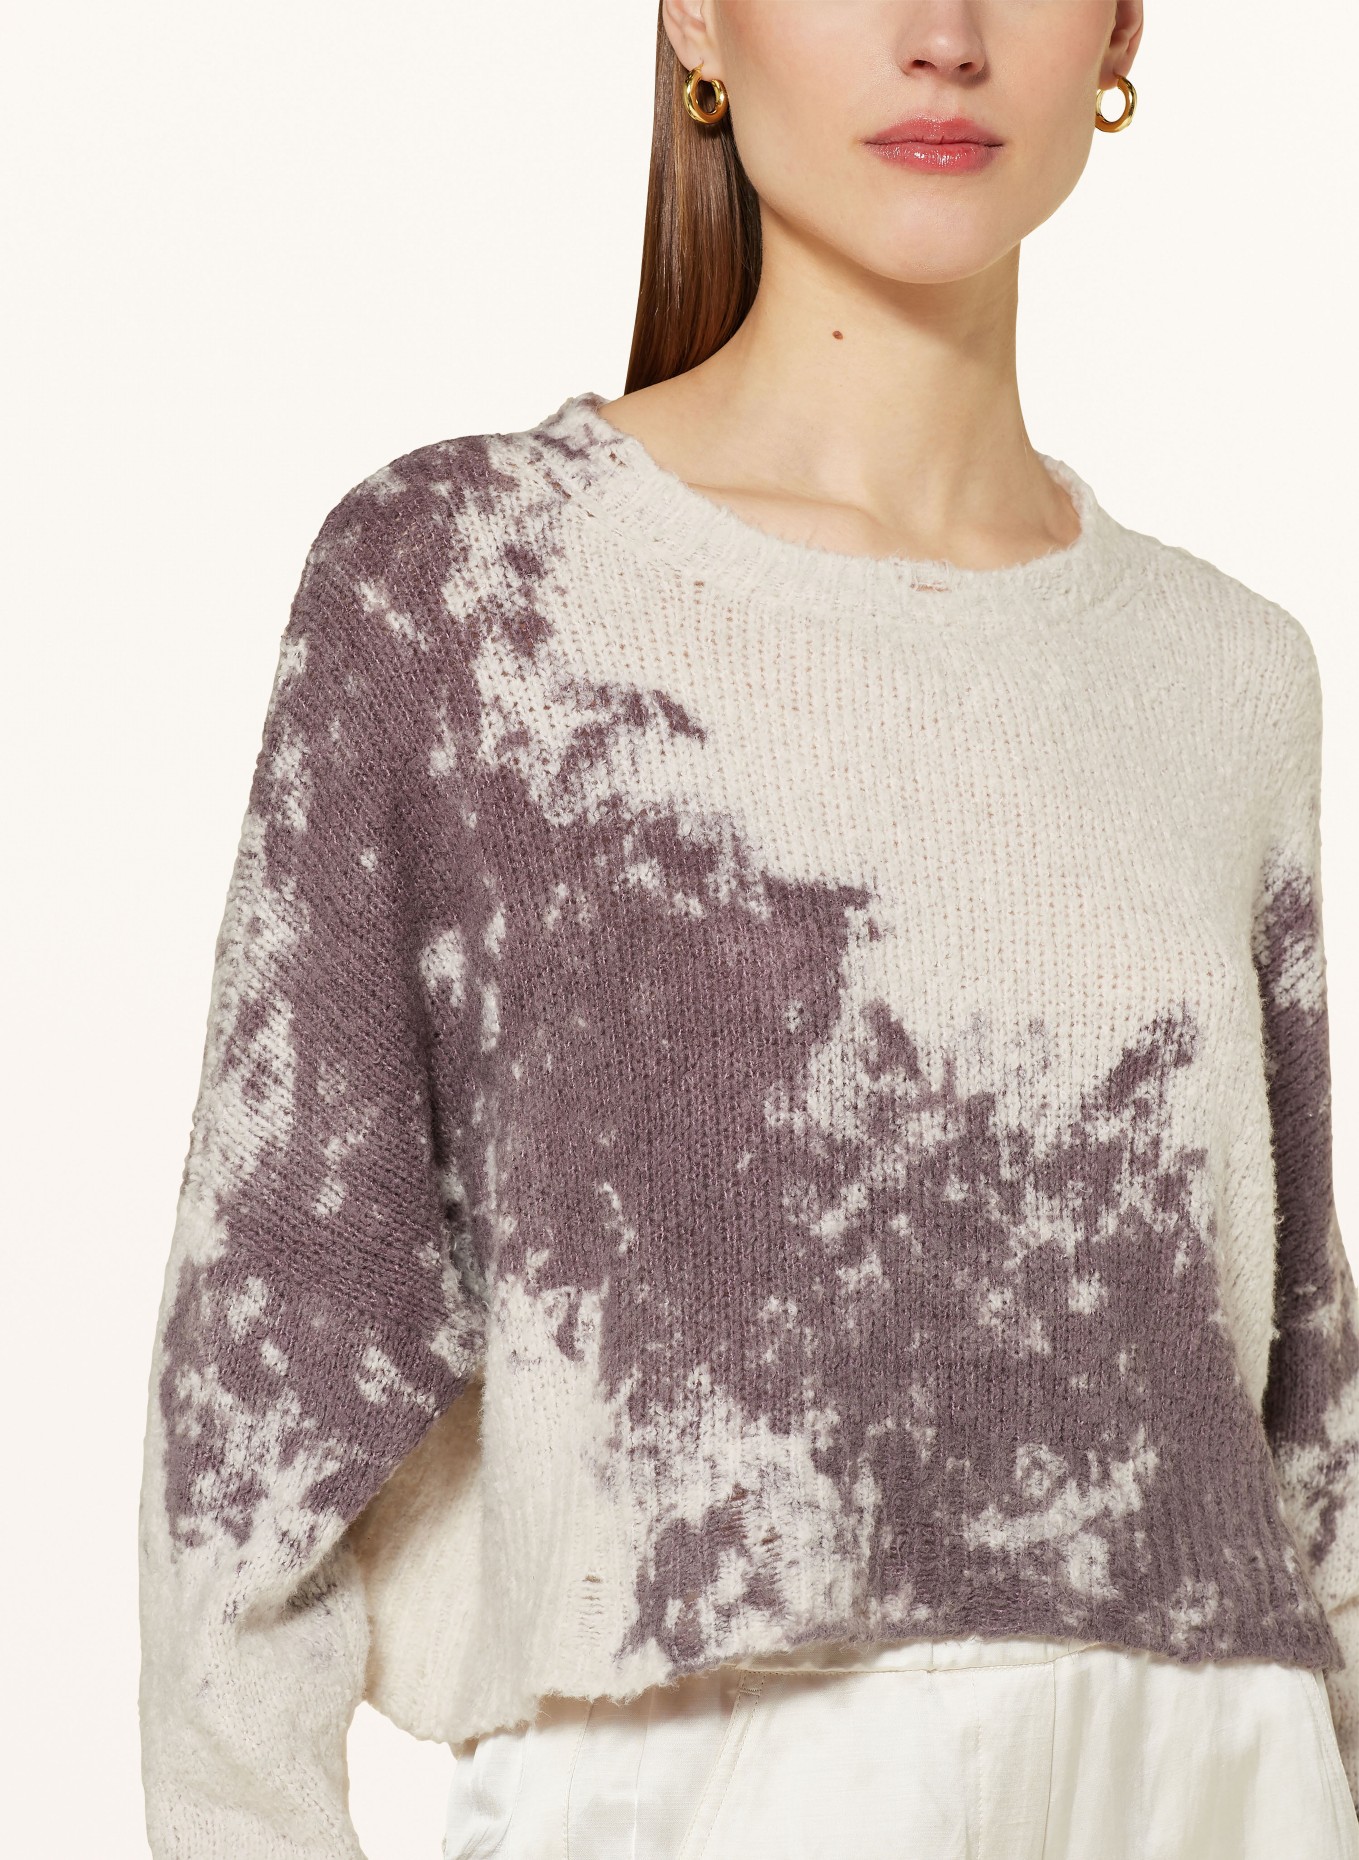 AVANT TOI Cropped sweater, Color: 18 lavender  grau lavendel (Image 4)